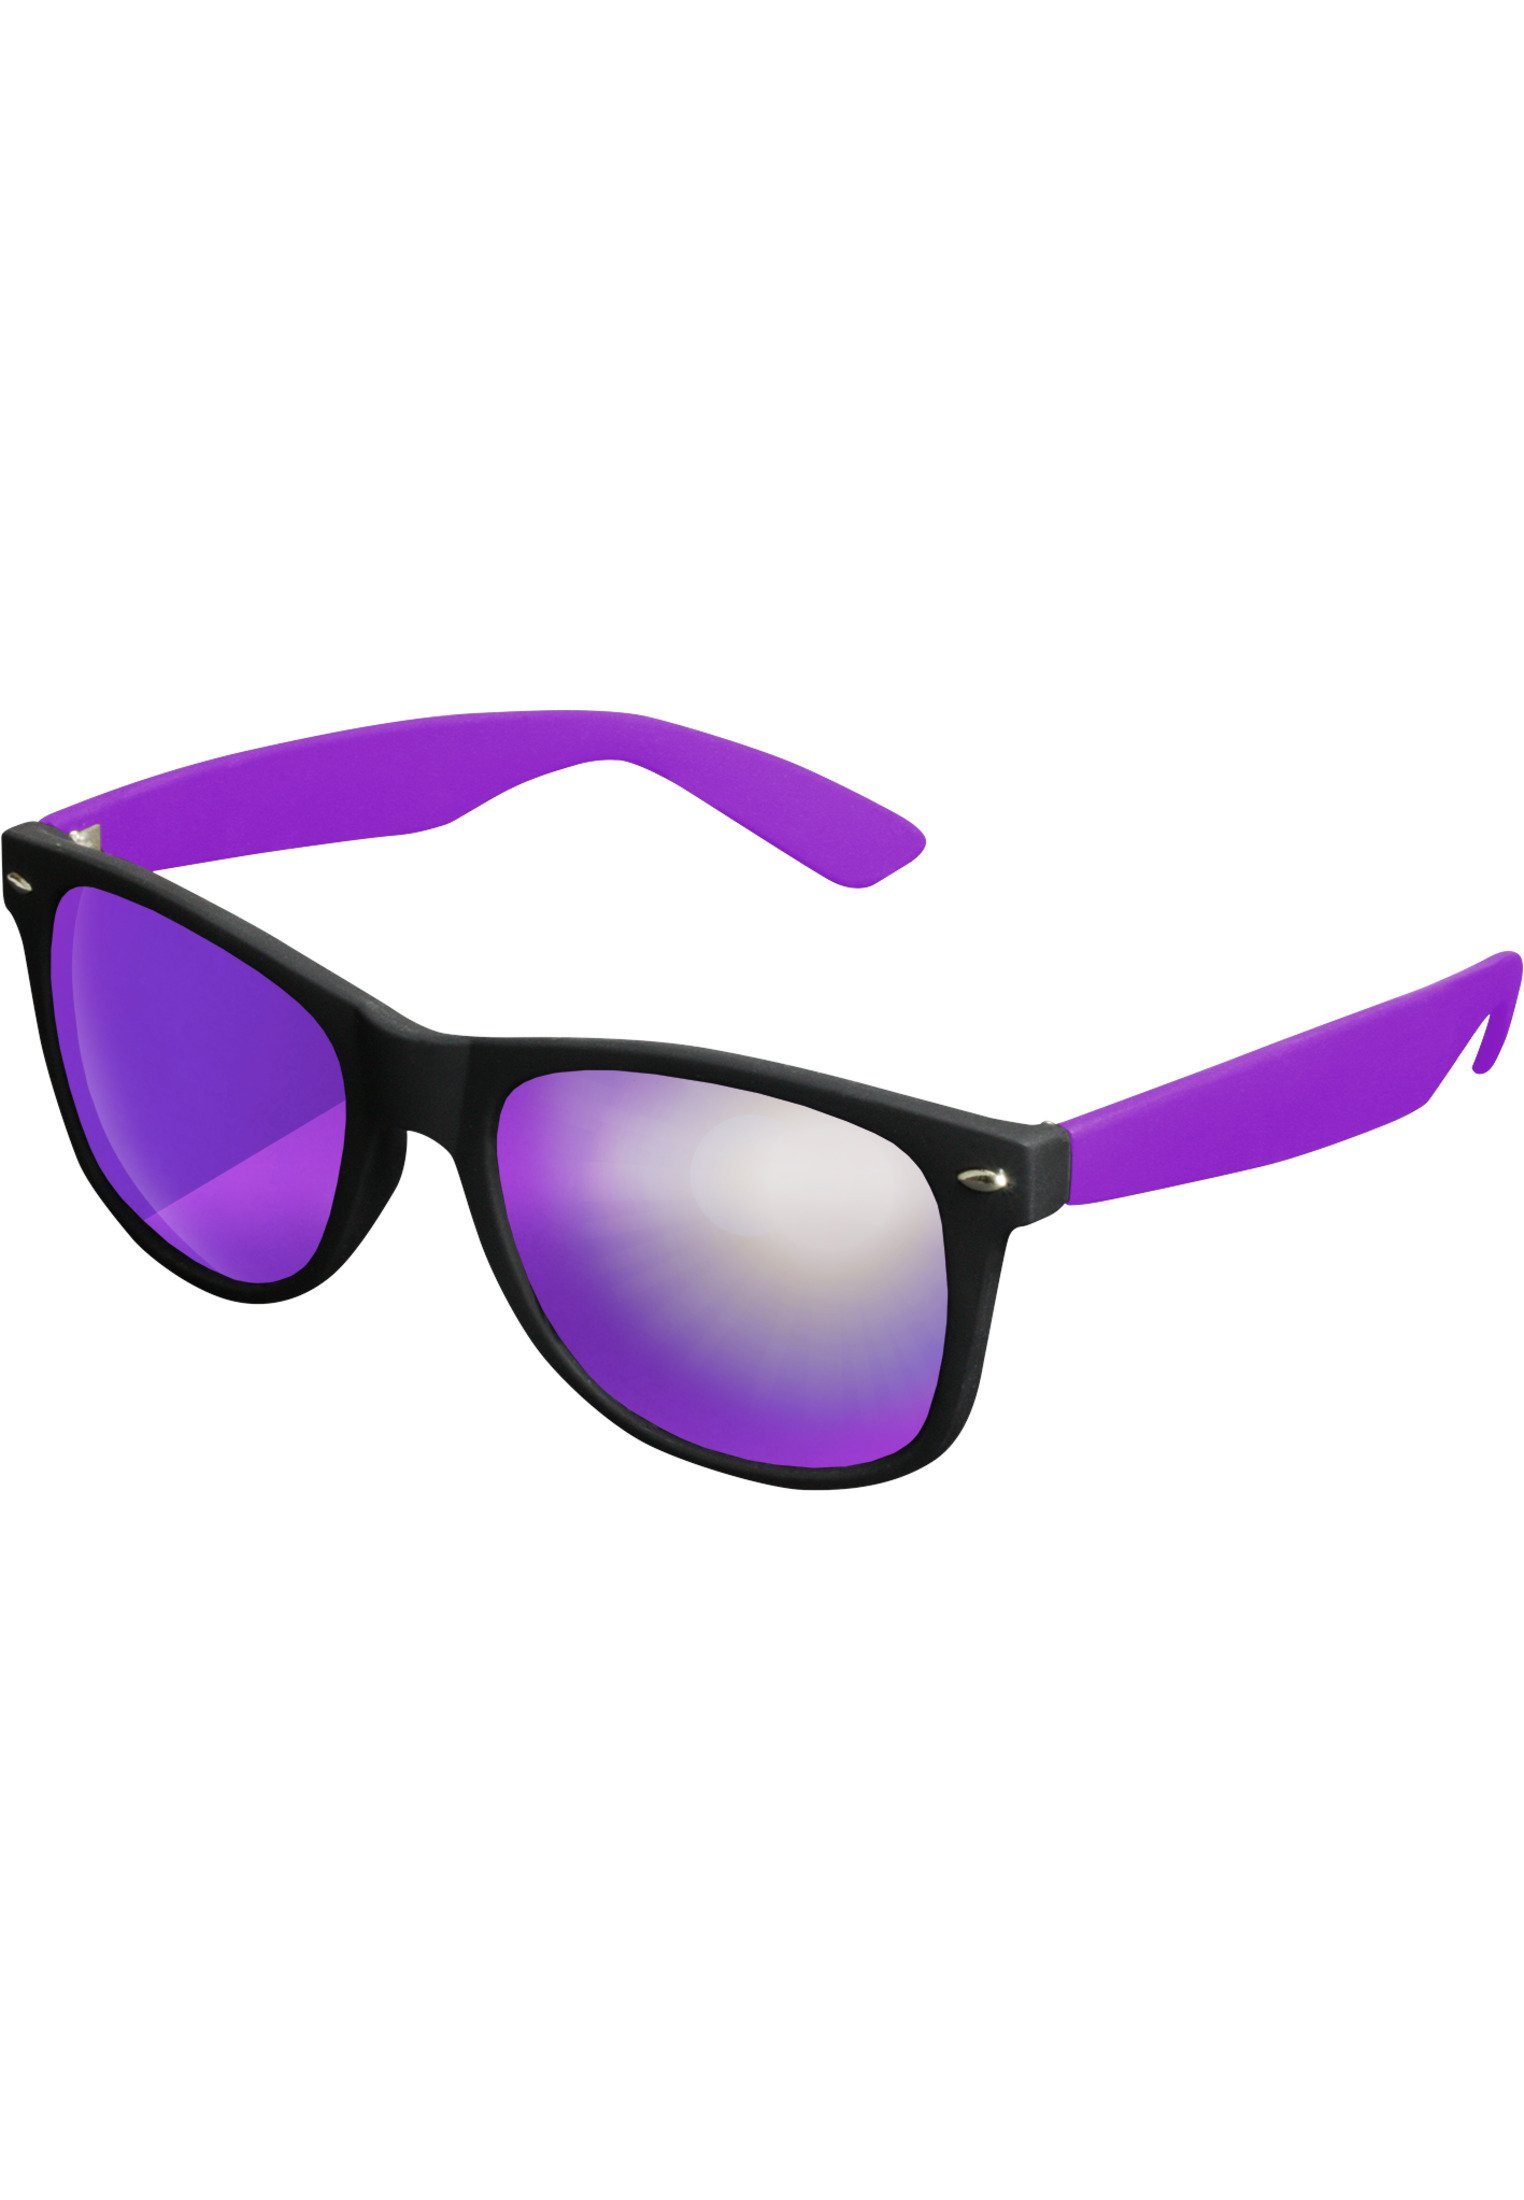 blk/pur/pur Sonnenbrille MSTRDS Accessoires Likoma Mirror Sunglasses